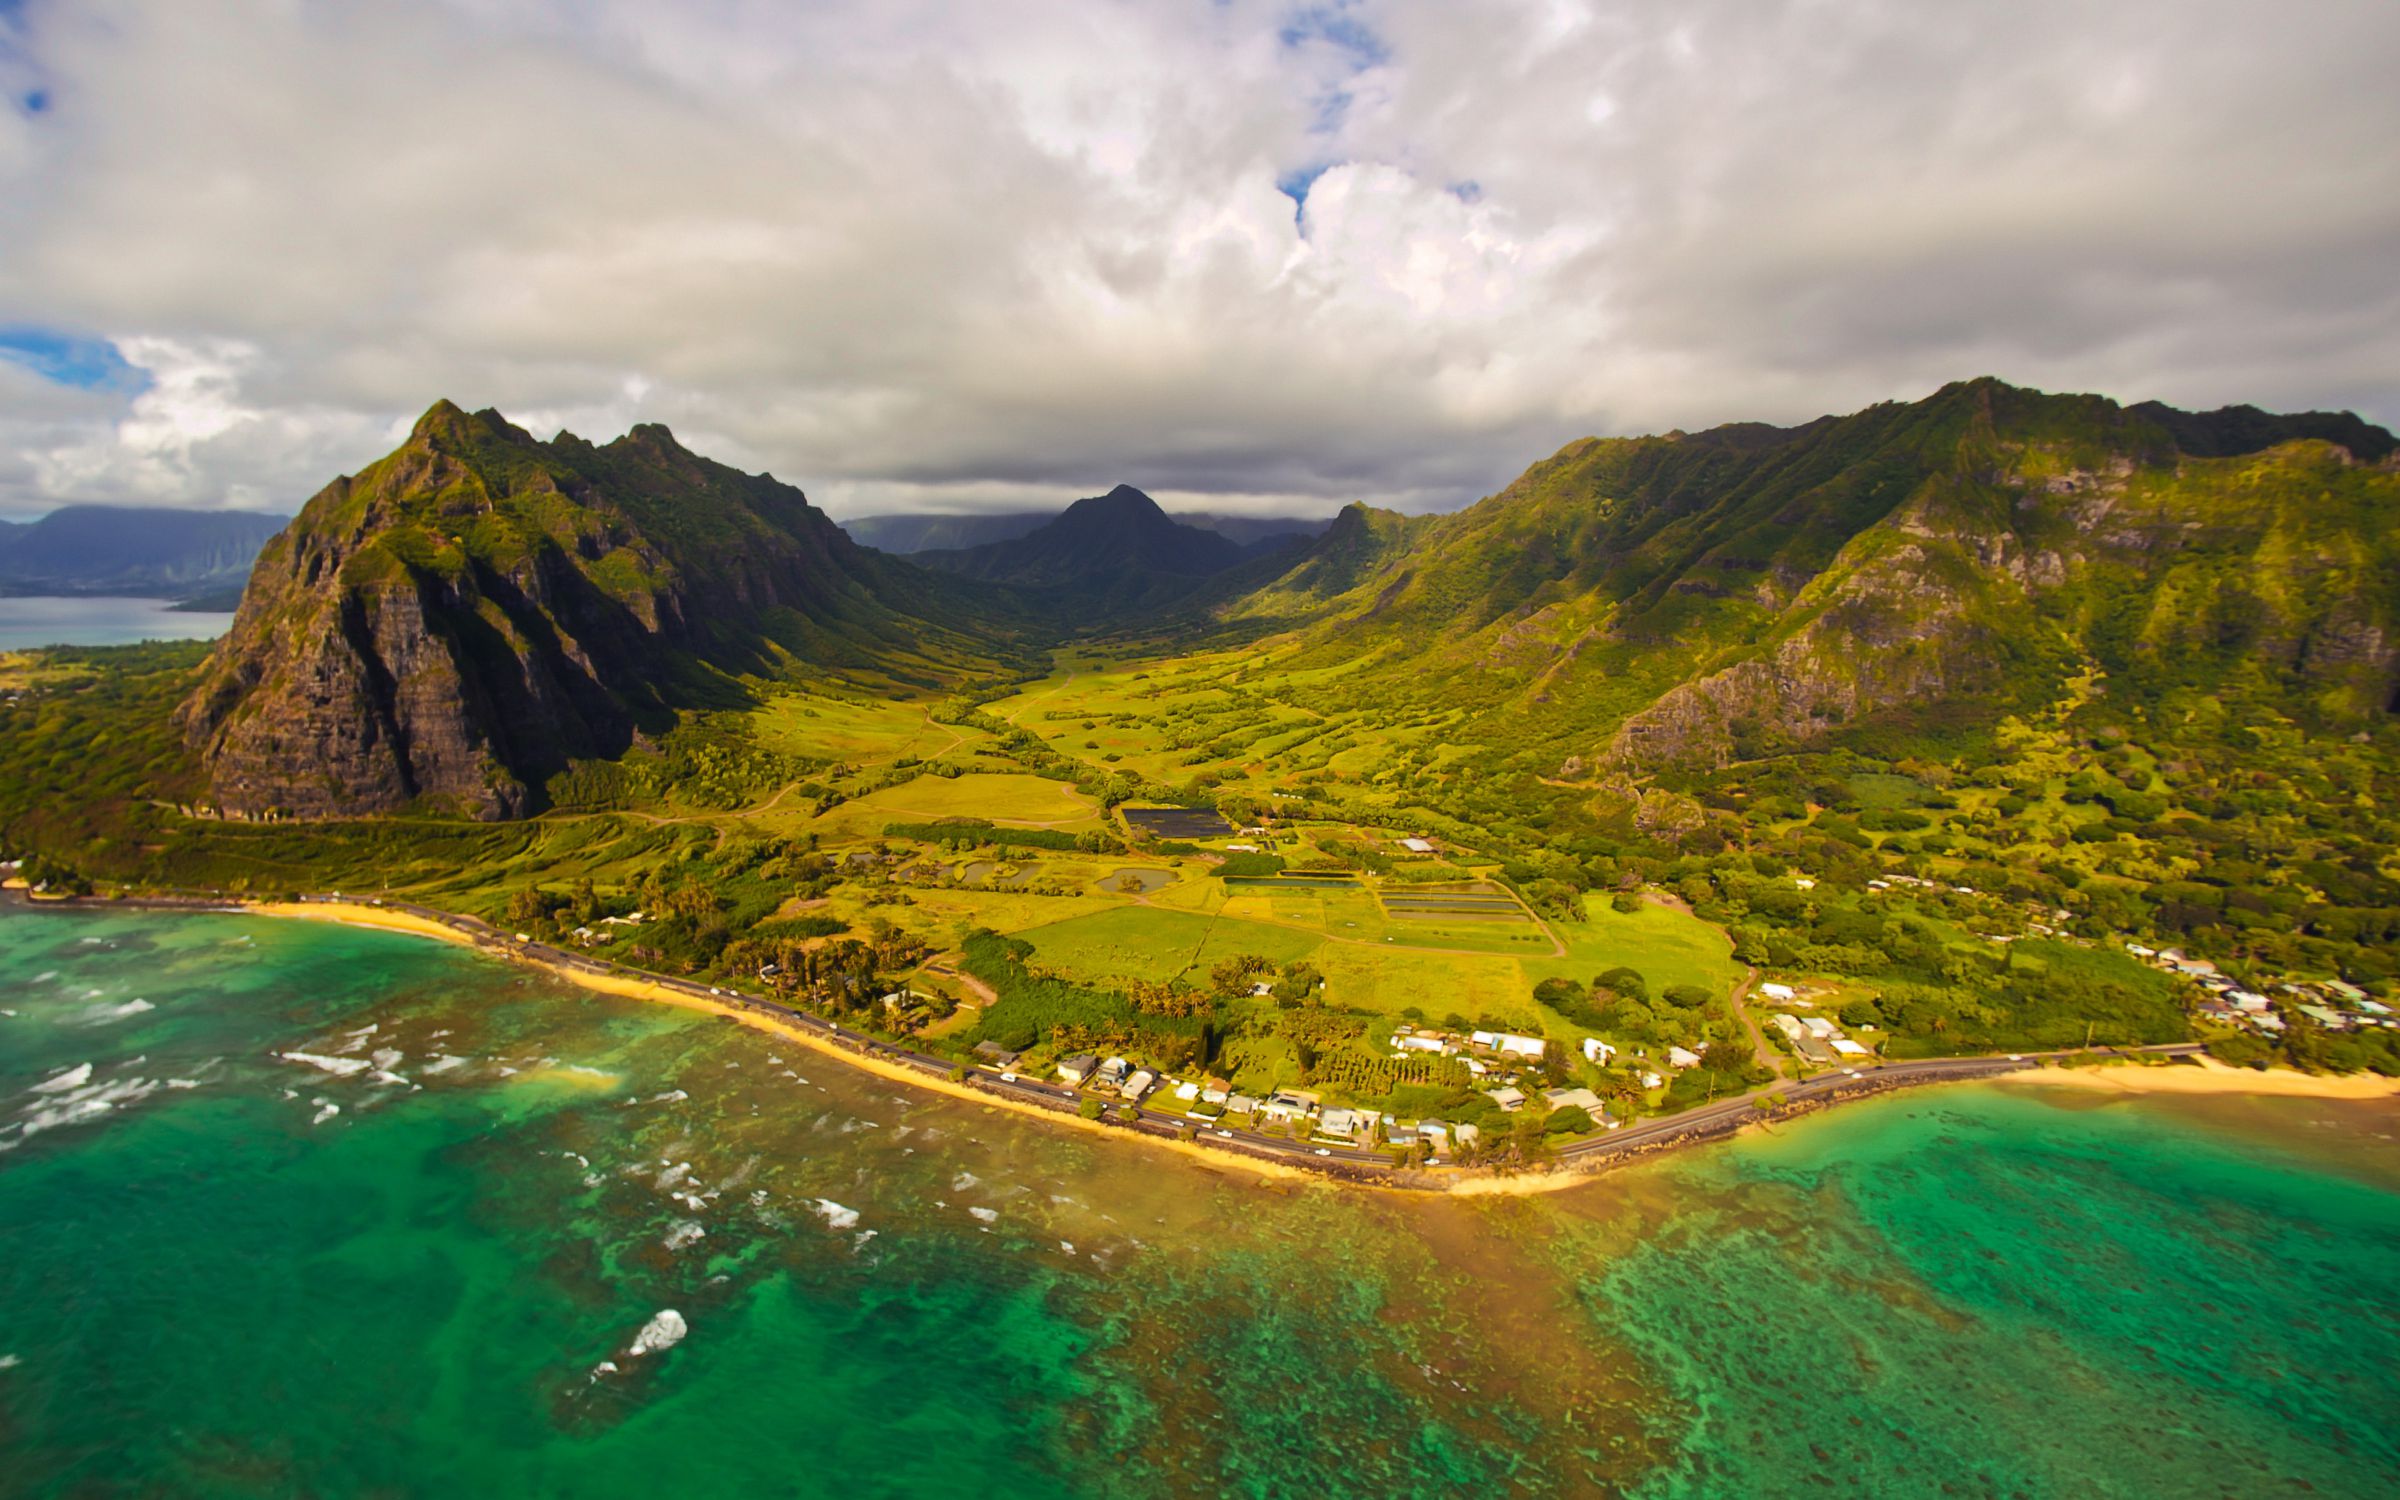 Panoramic shot of a Hawaiian island